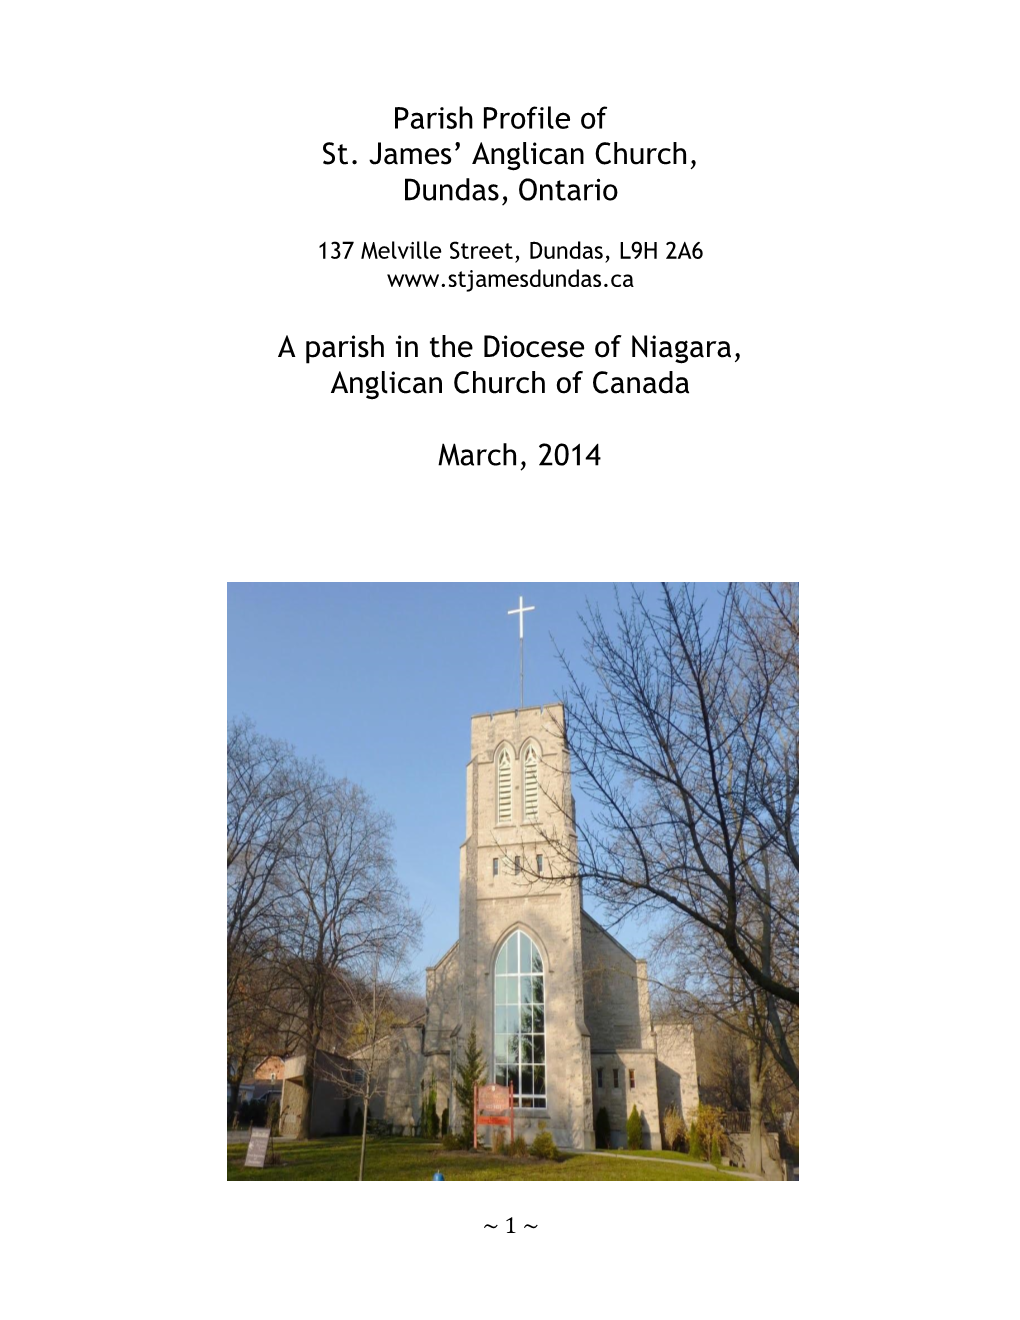 Parish Profile of St. James' Anglican Church, Dundas, Ontario a Parish